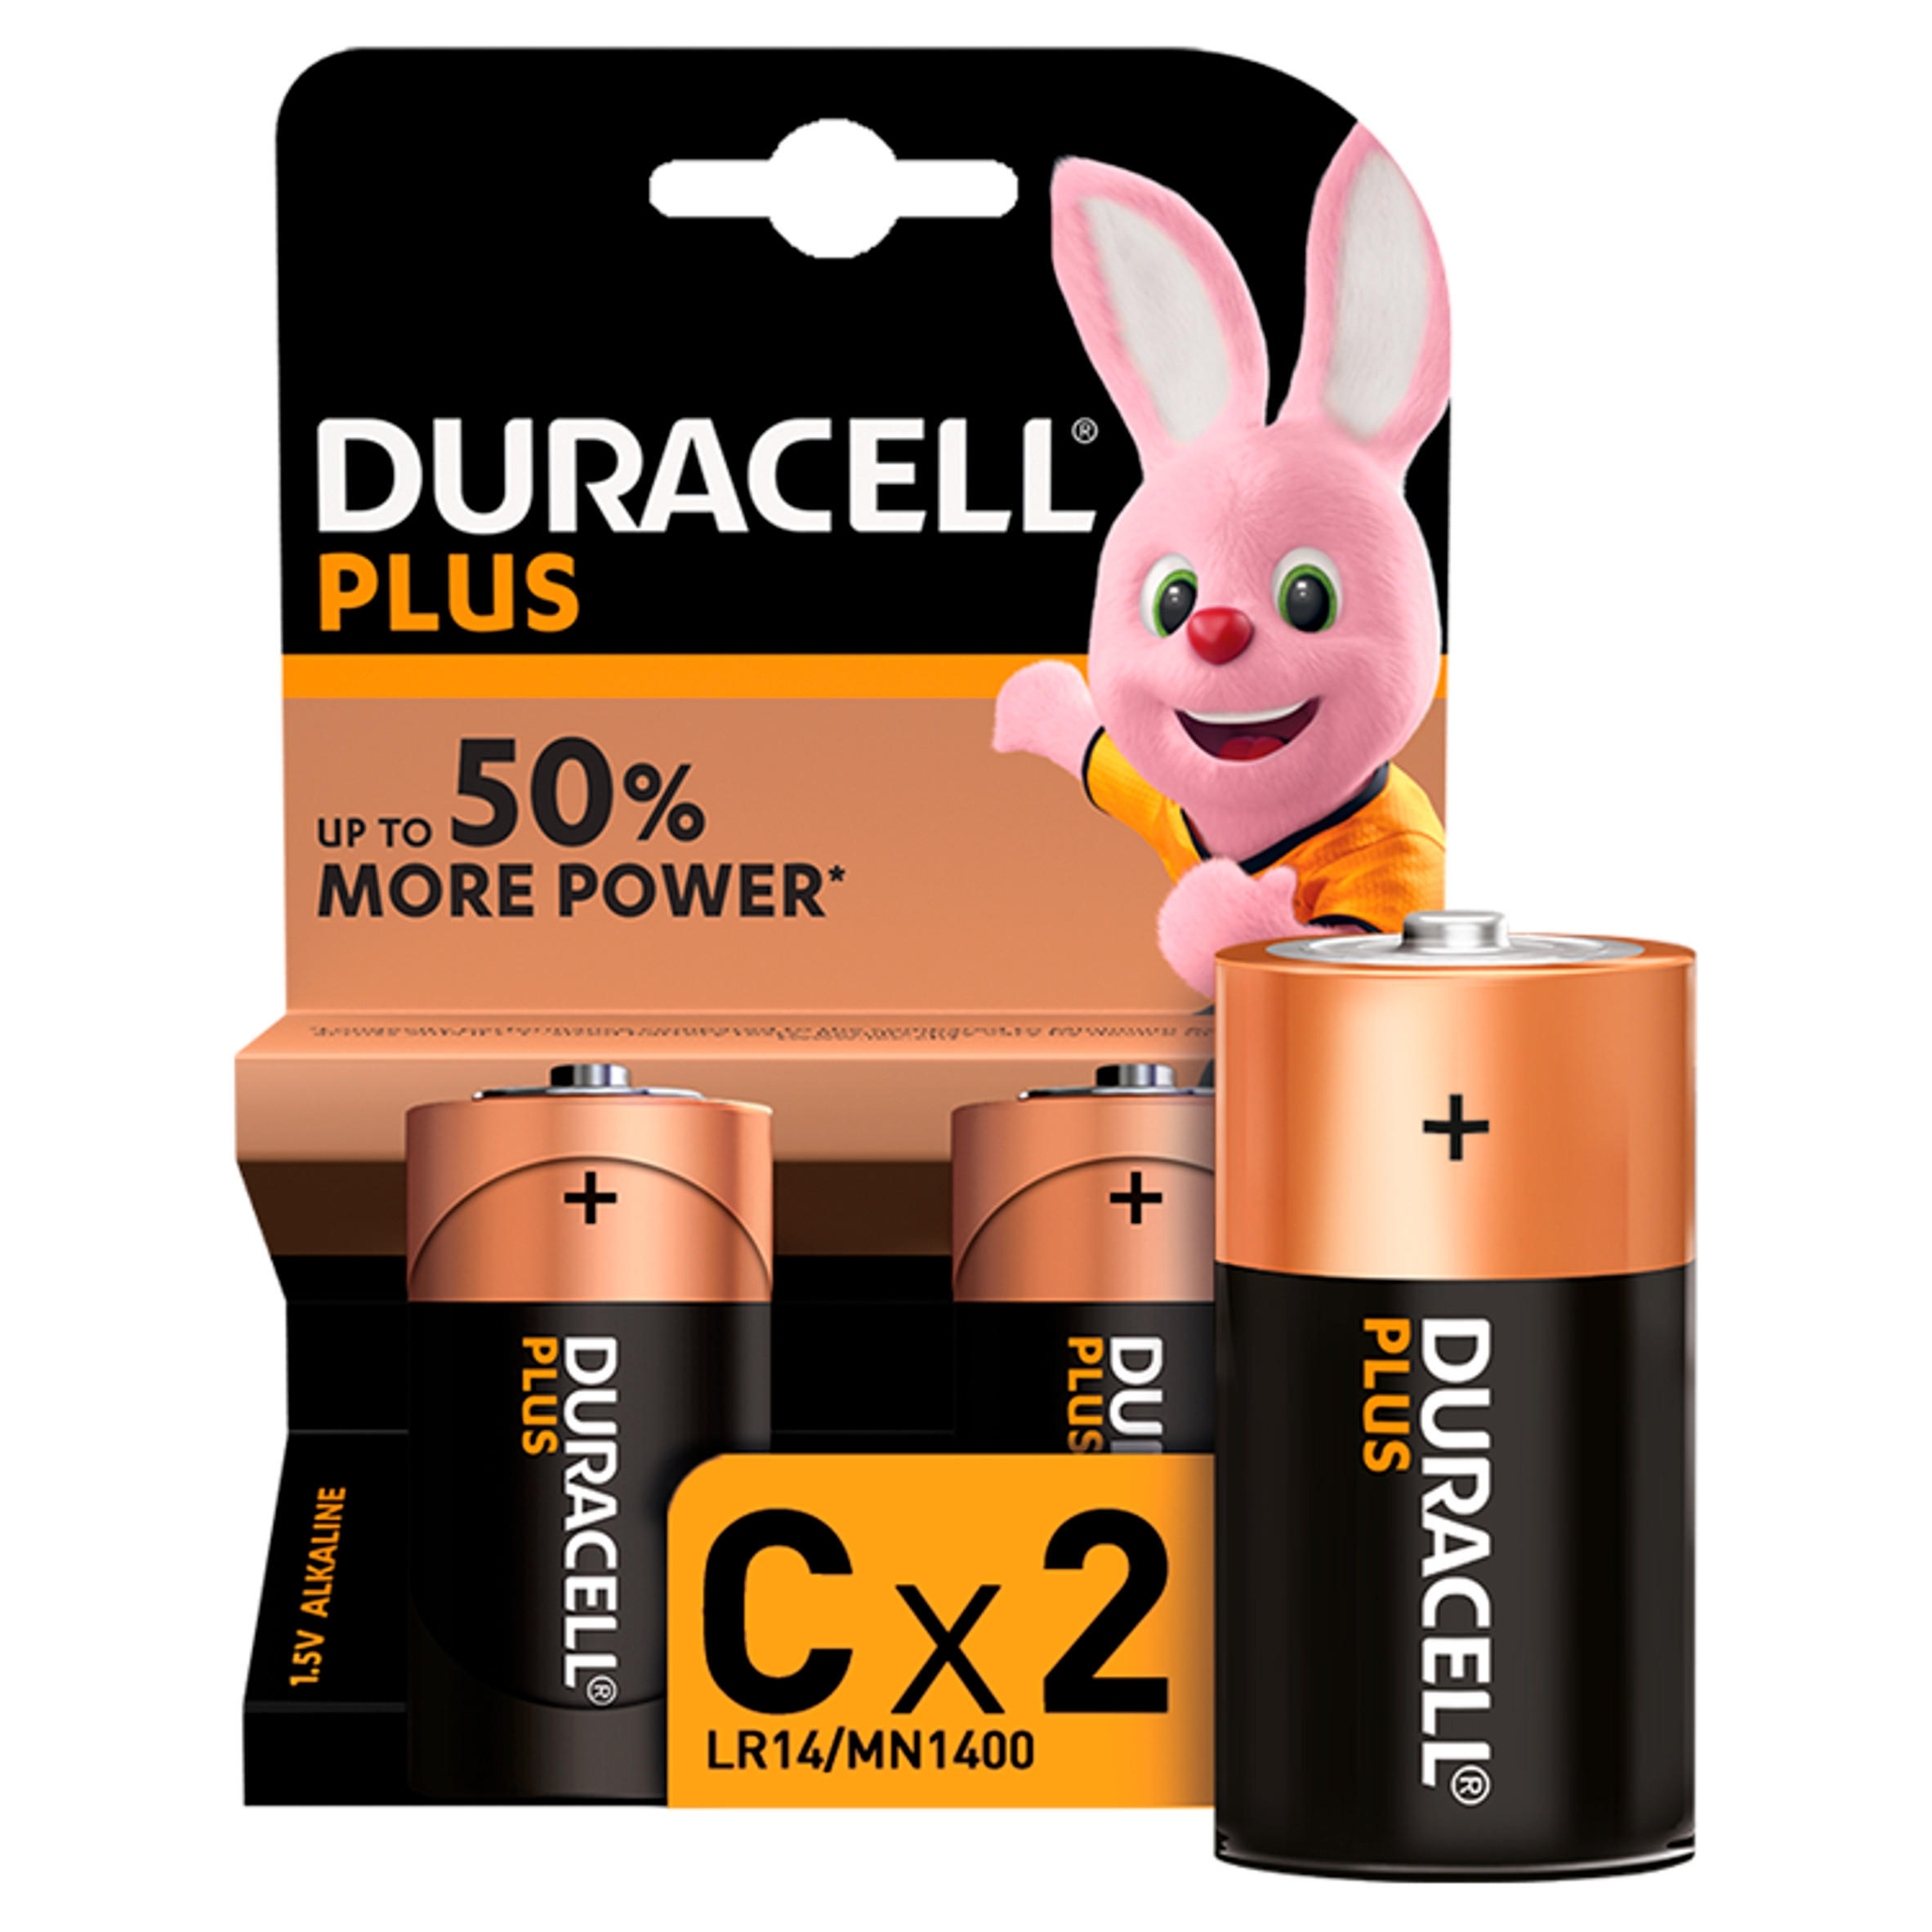 duracell c battery